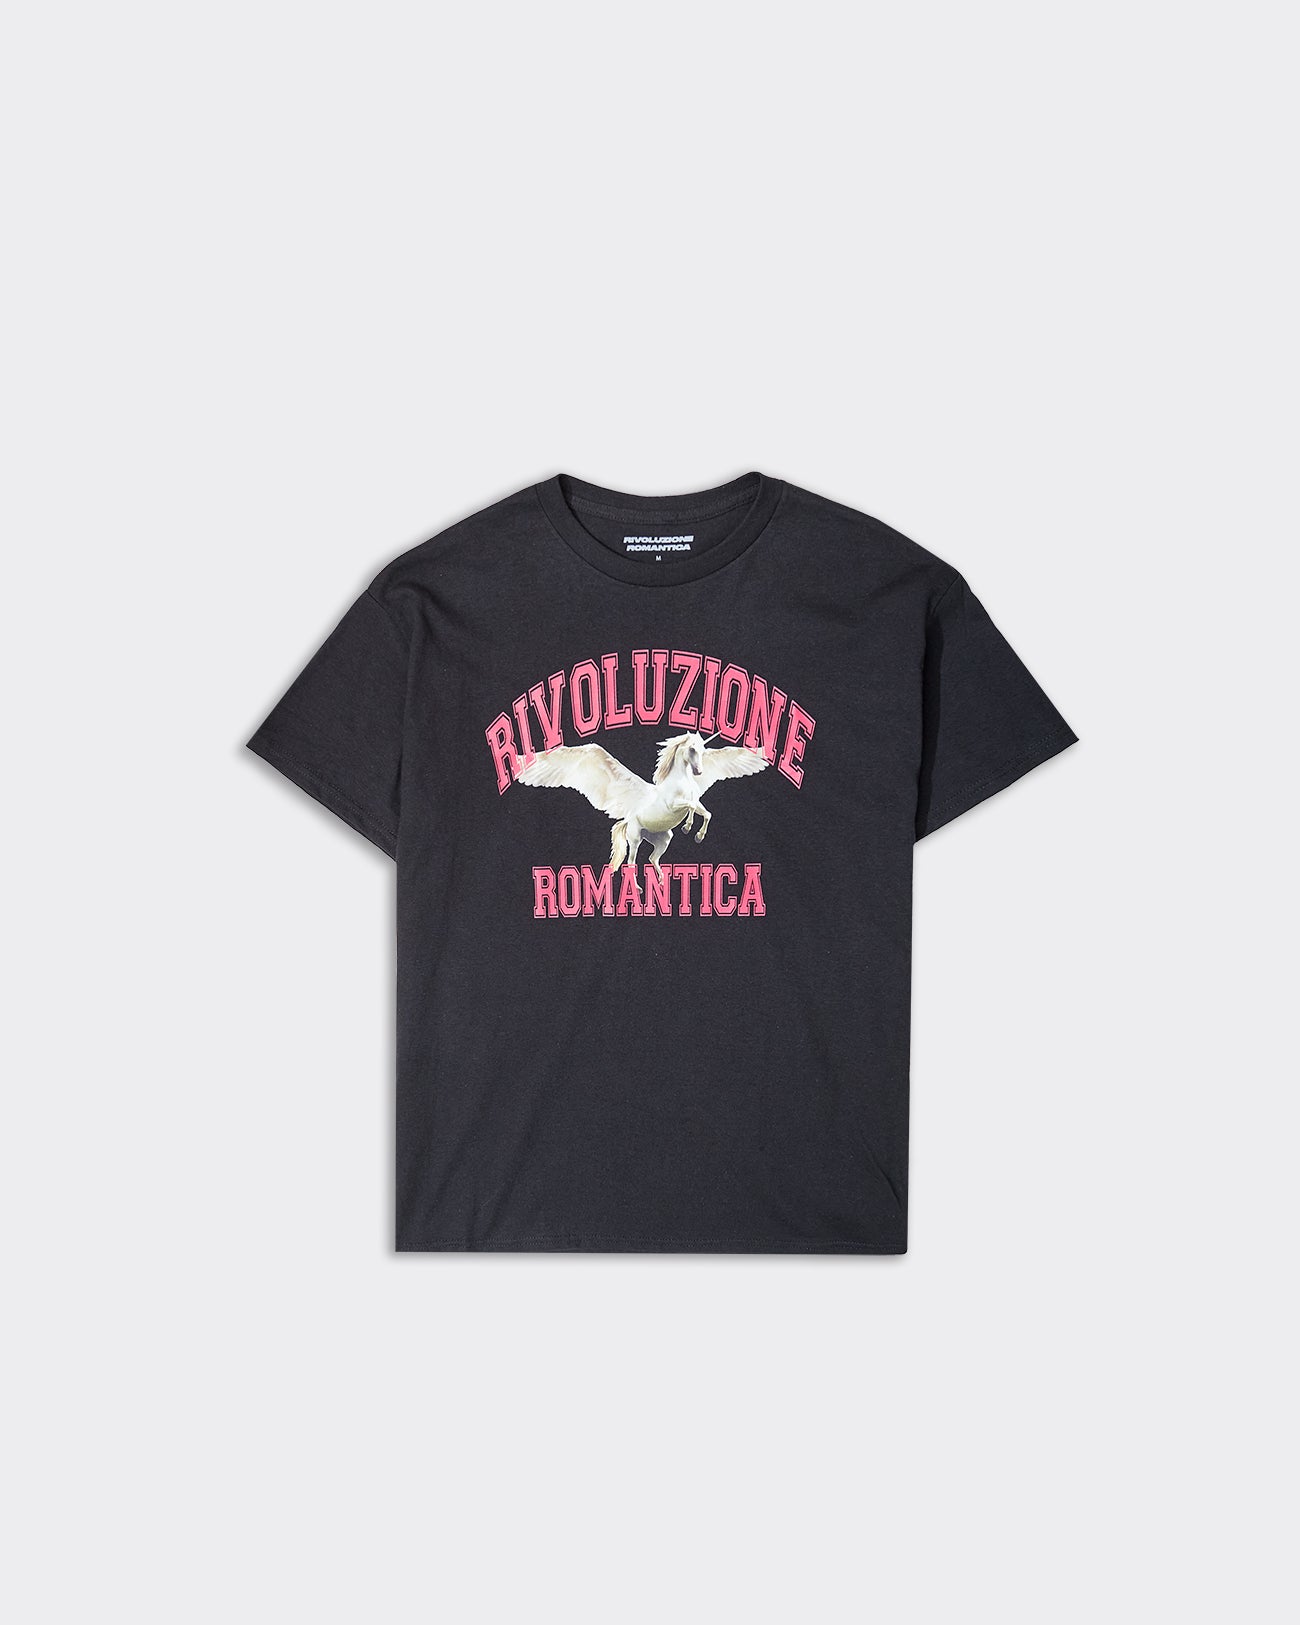 Black Unicorn T-Shirt